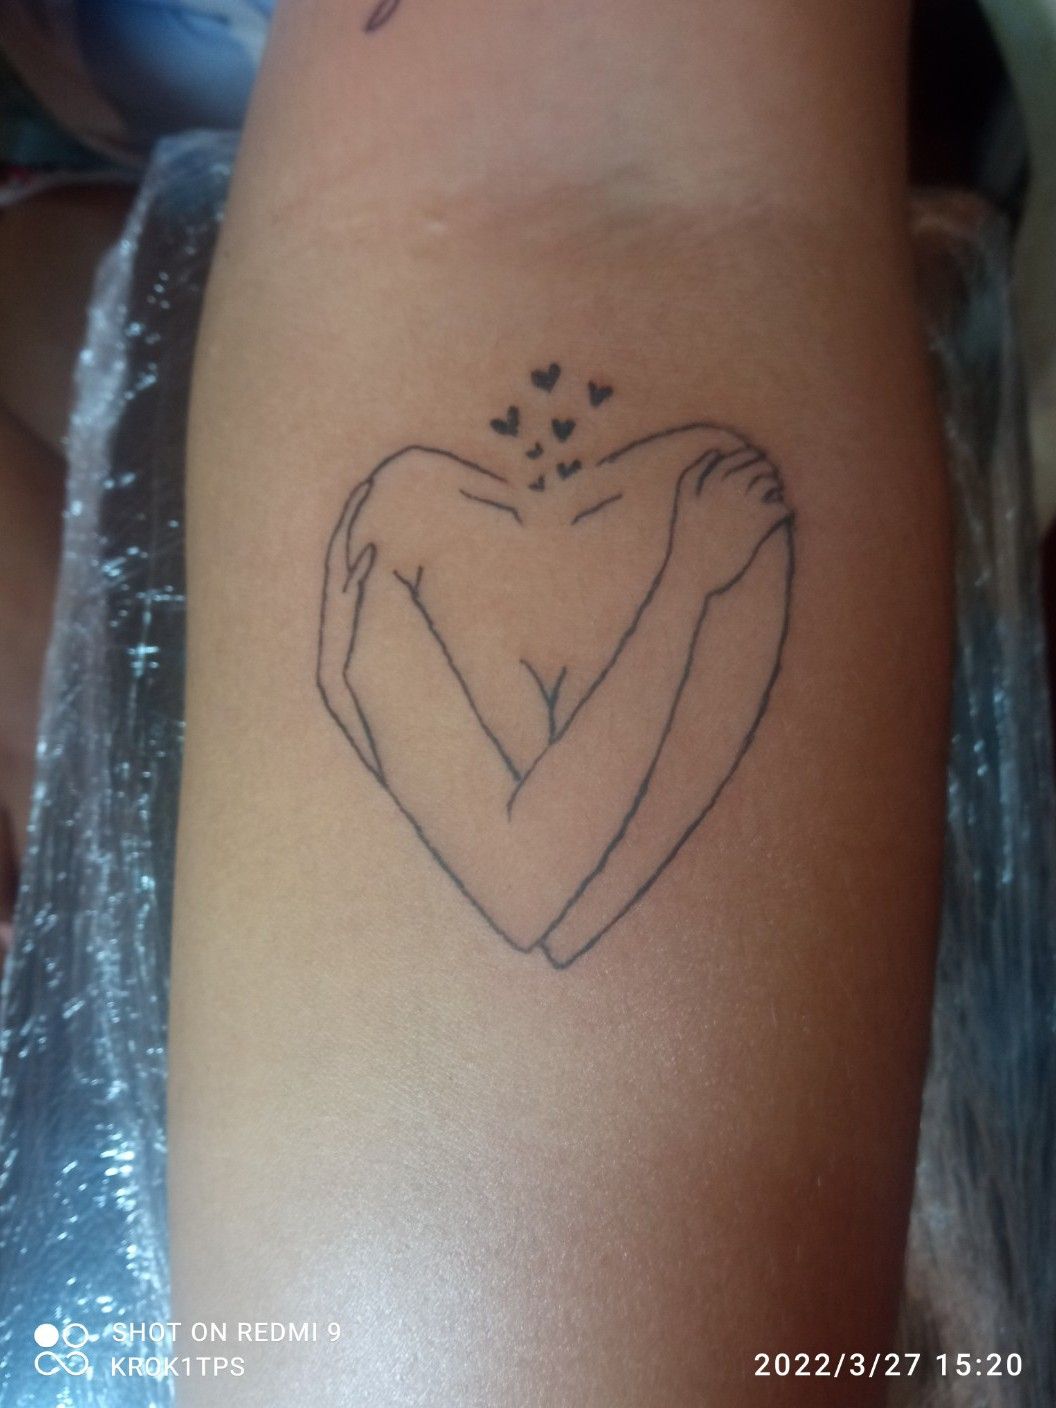 ☮ PAZ Y AMOR 💜 {PEACE LOVE}... - Portobello Tattoo & Piercing | Facebook